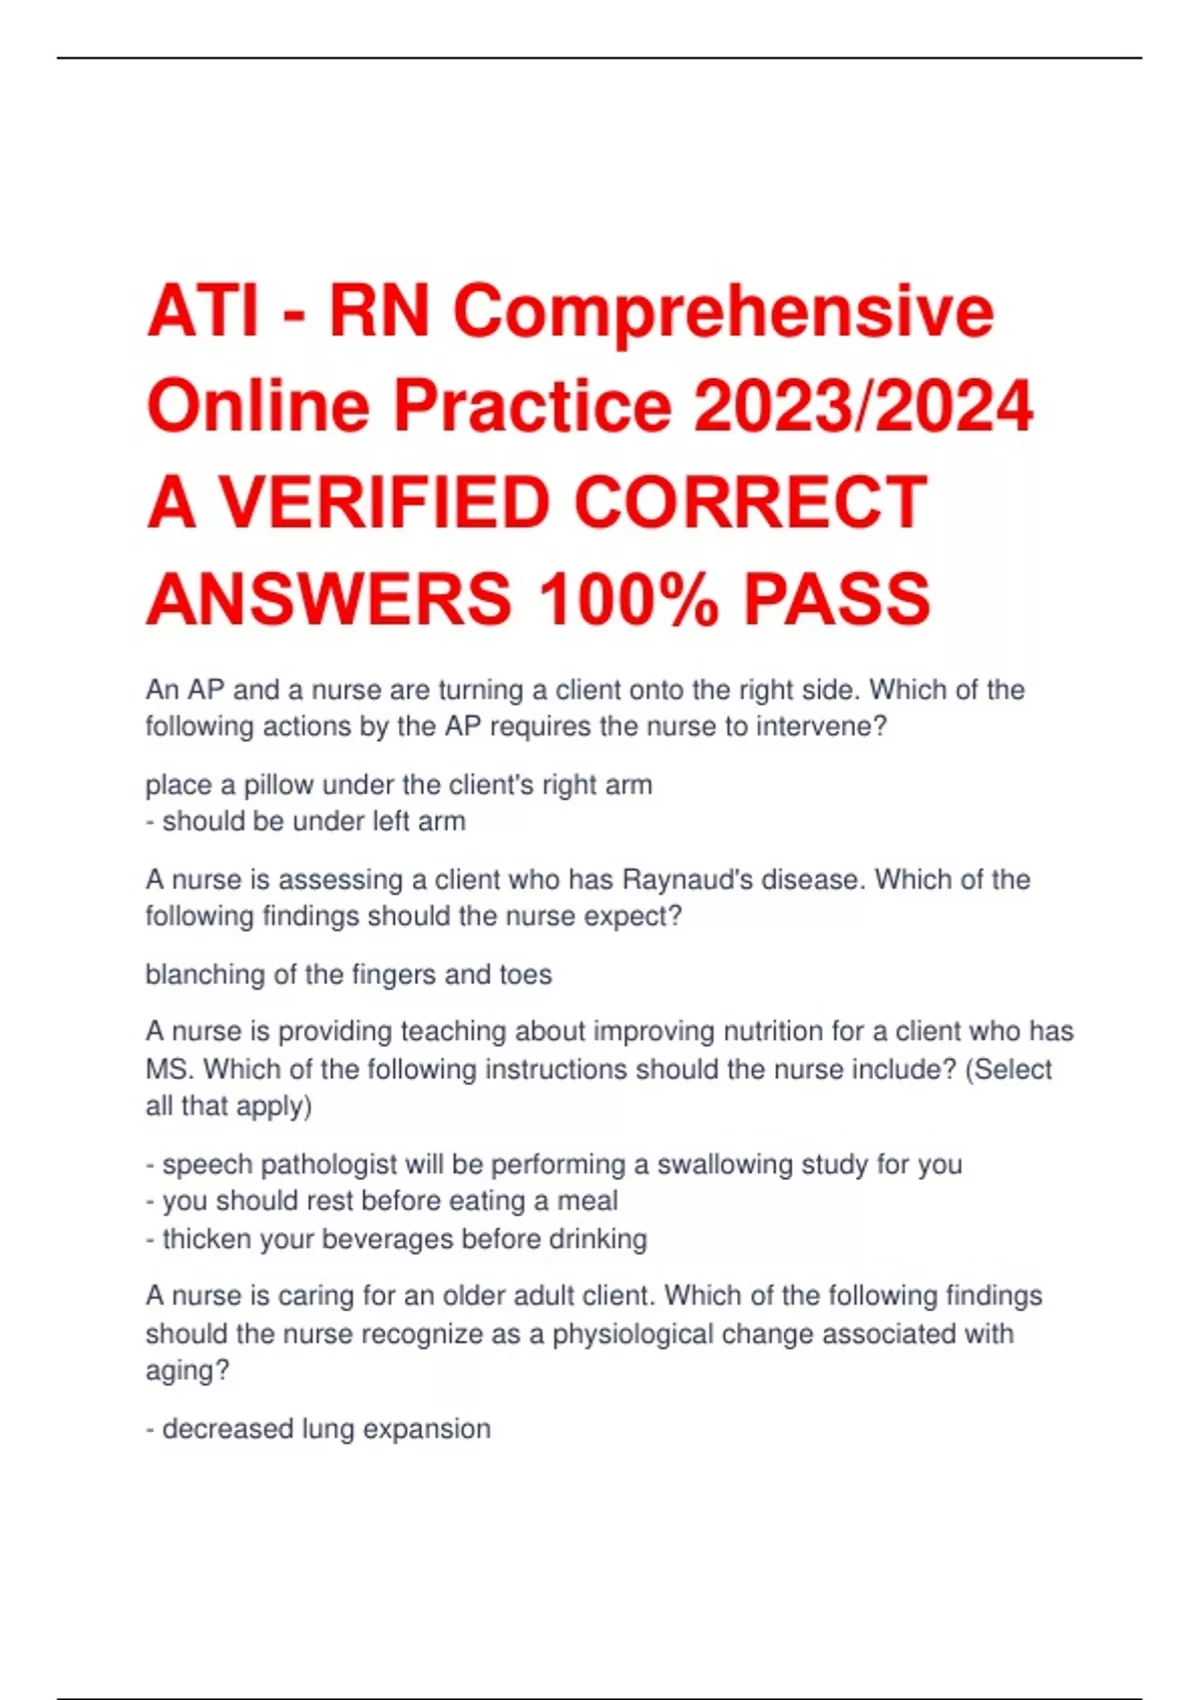 ATI RN Comprehensive Online Practice 2023/2024 A VERIFIED CORRECT